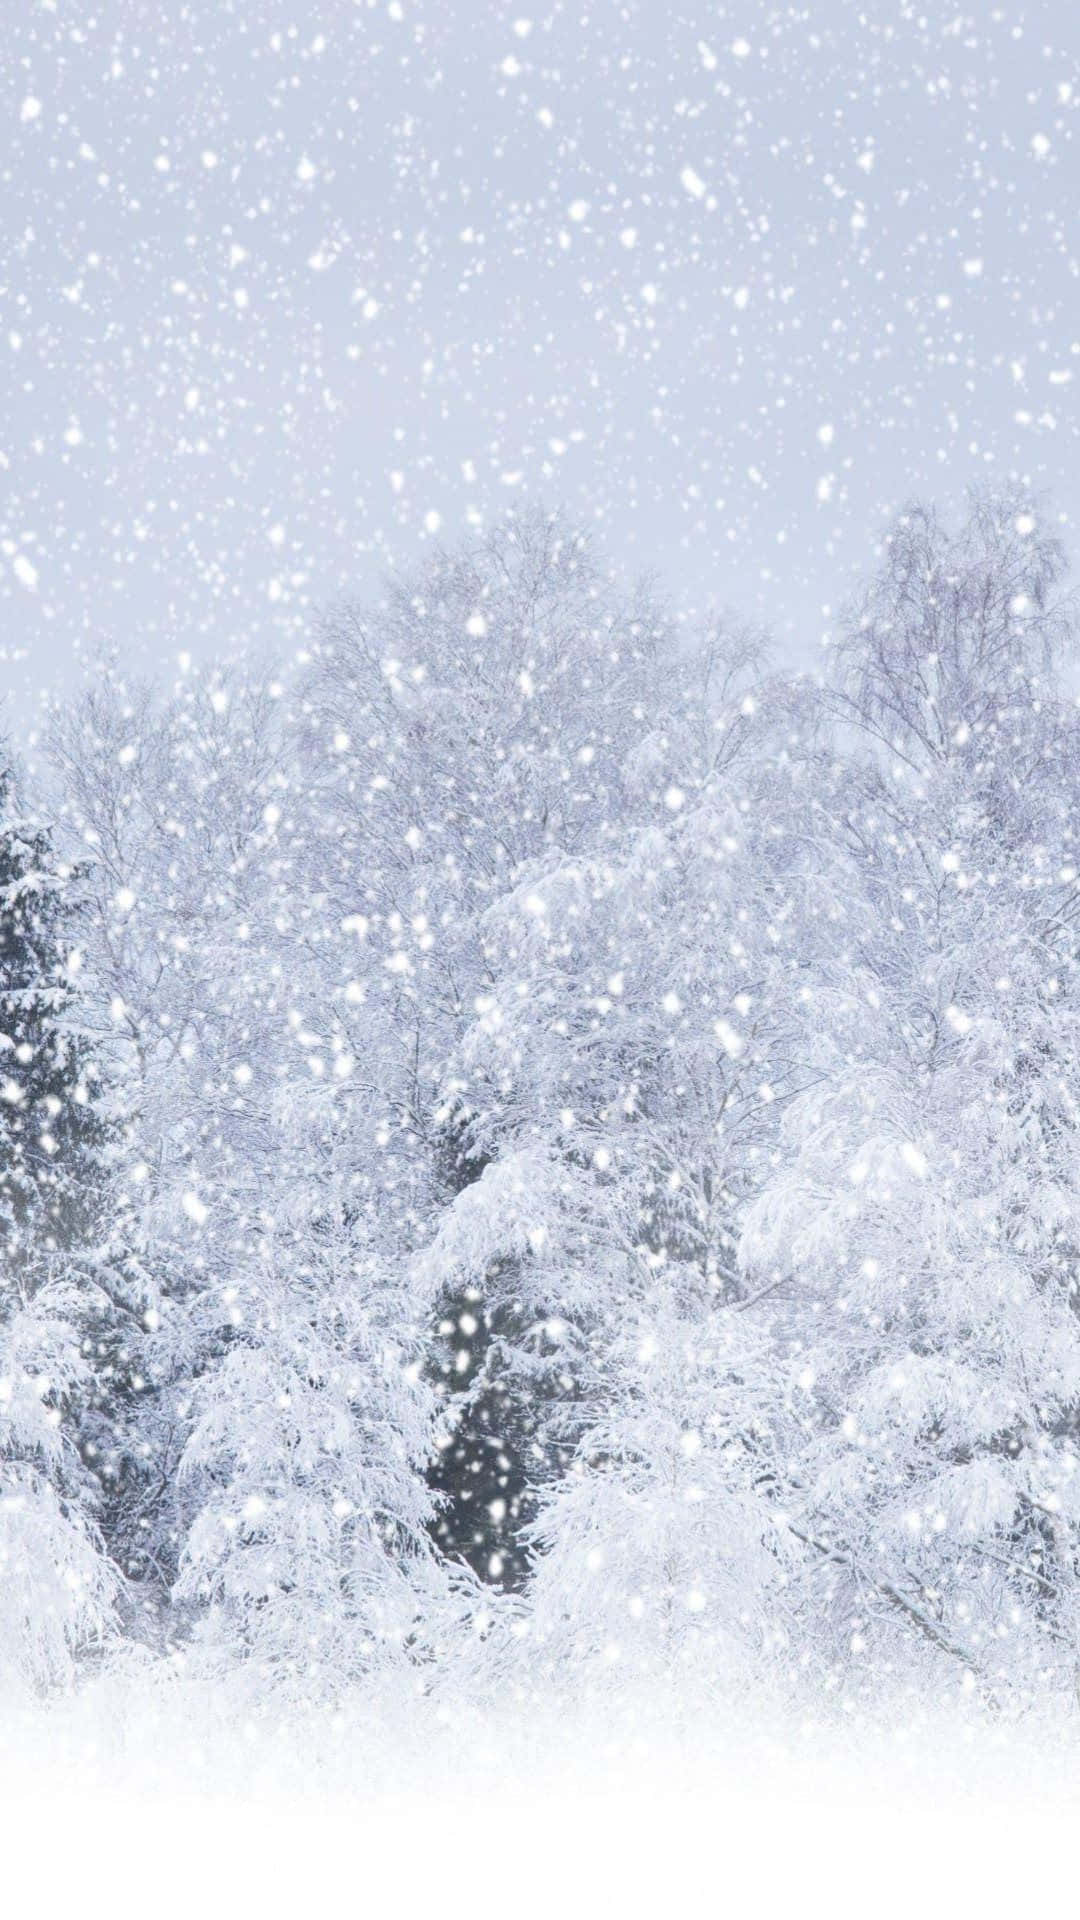 Tranquil Winter Wonderland for iPhone 6 Plus Wallpaper